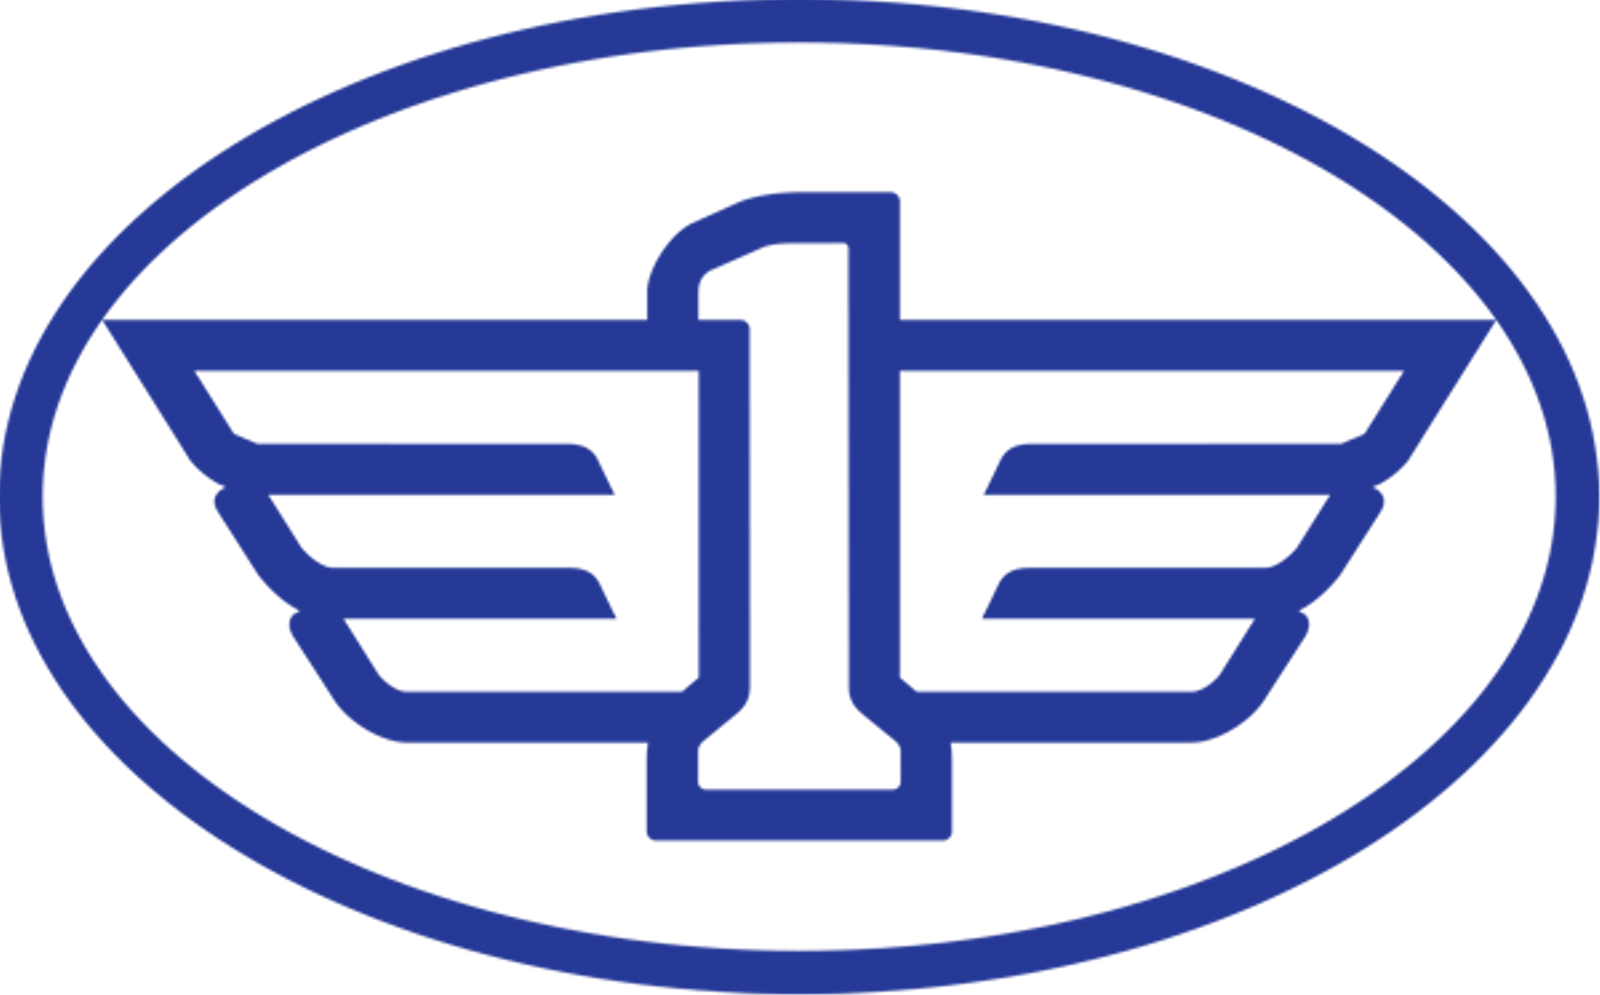 логотип FAW